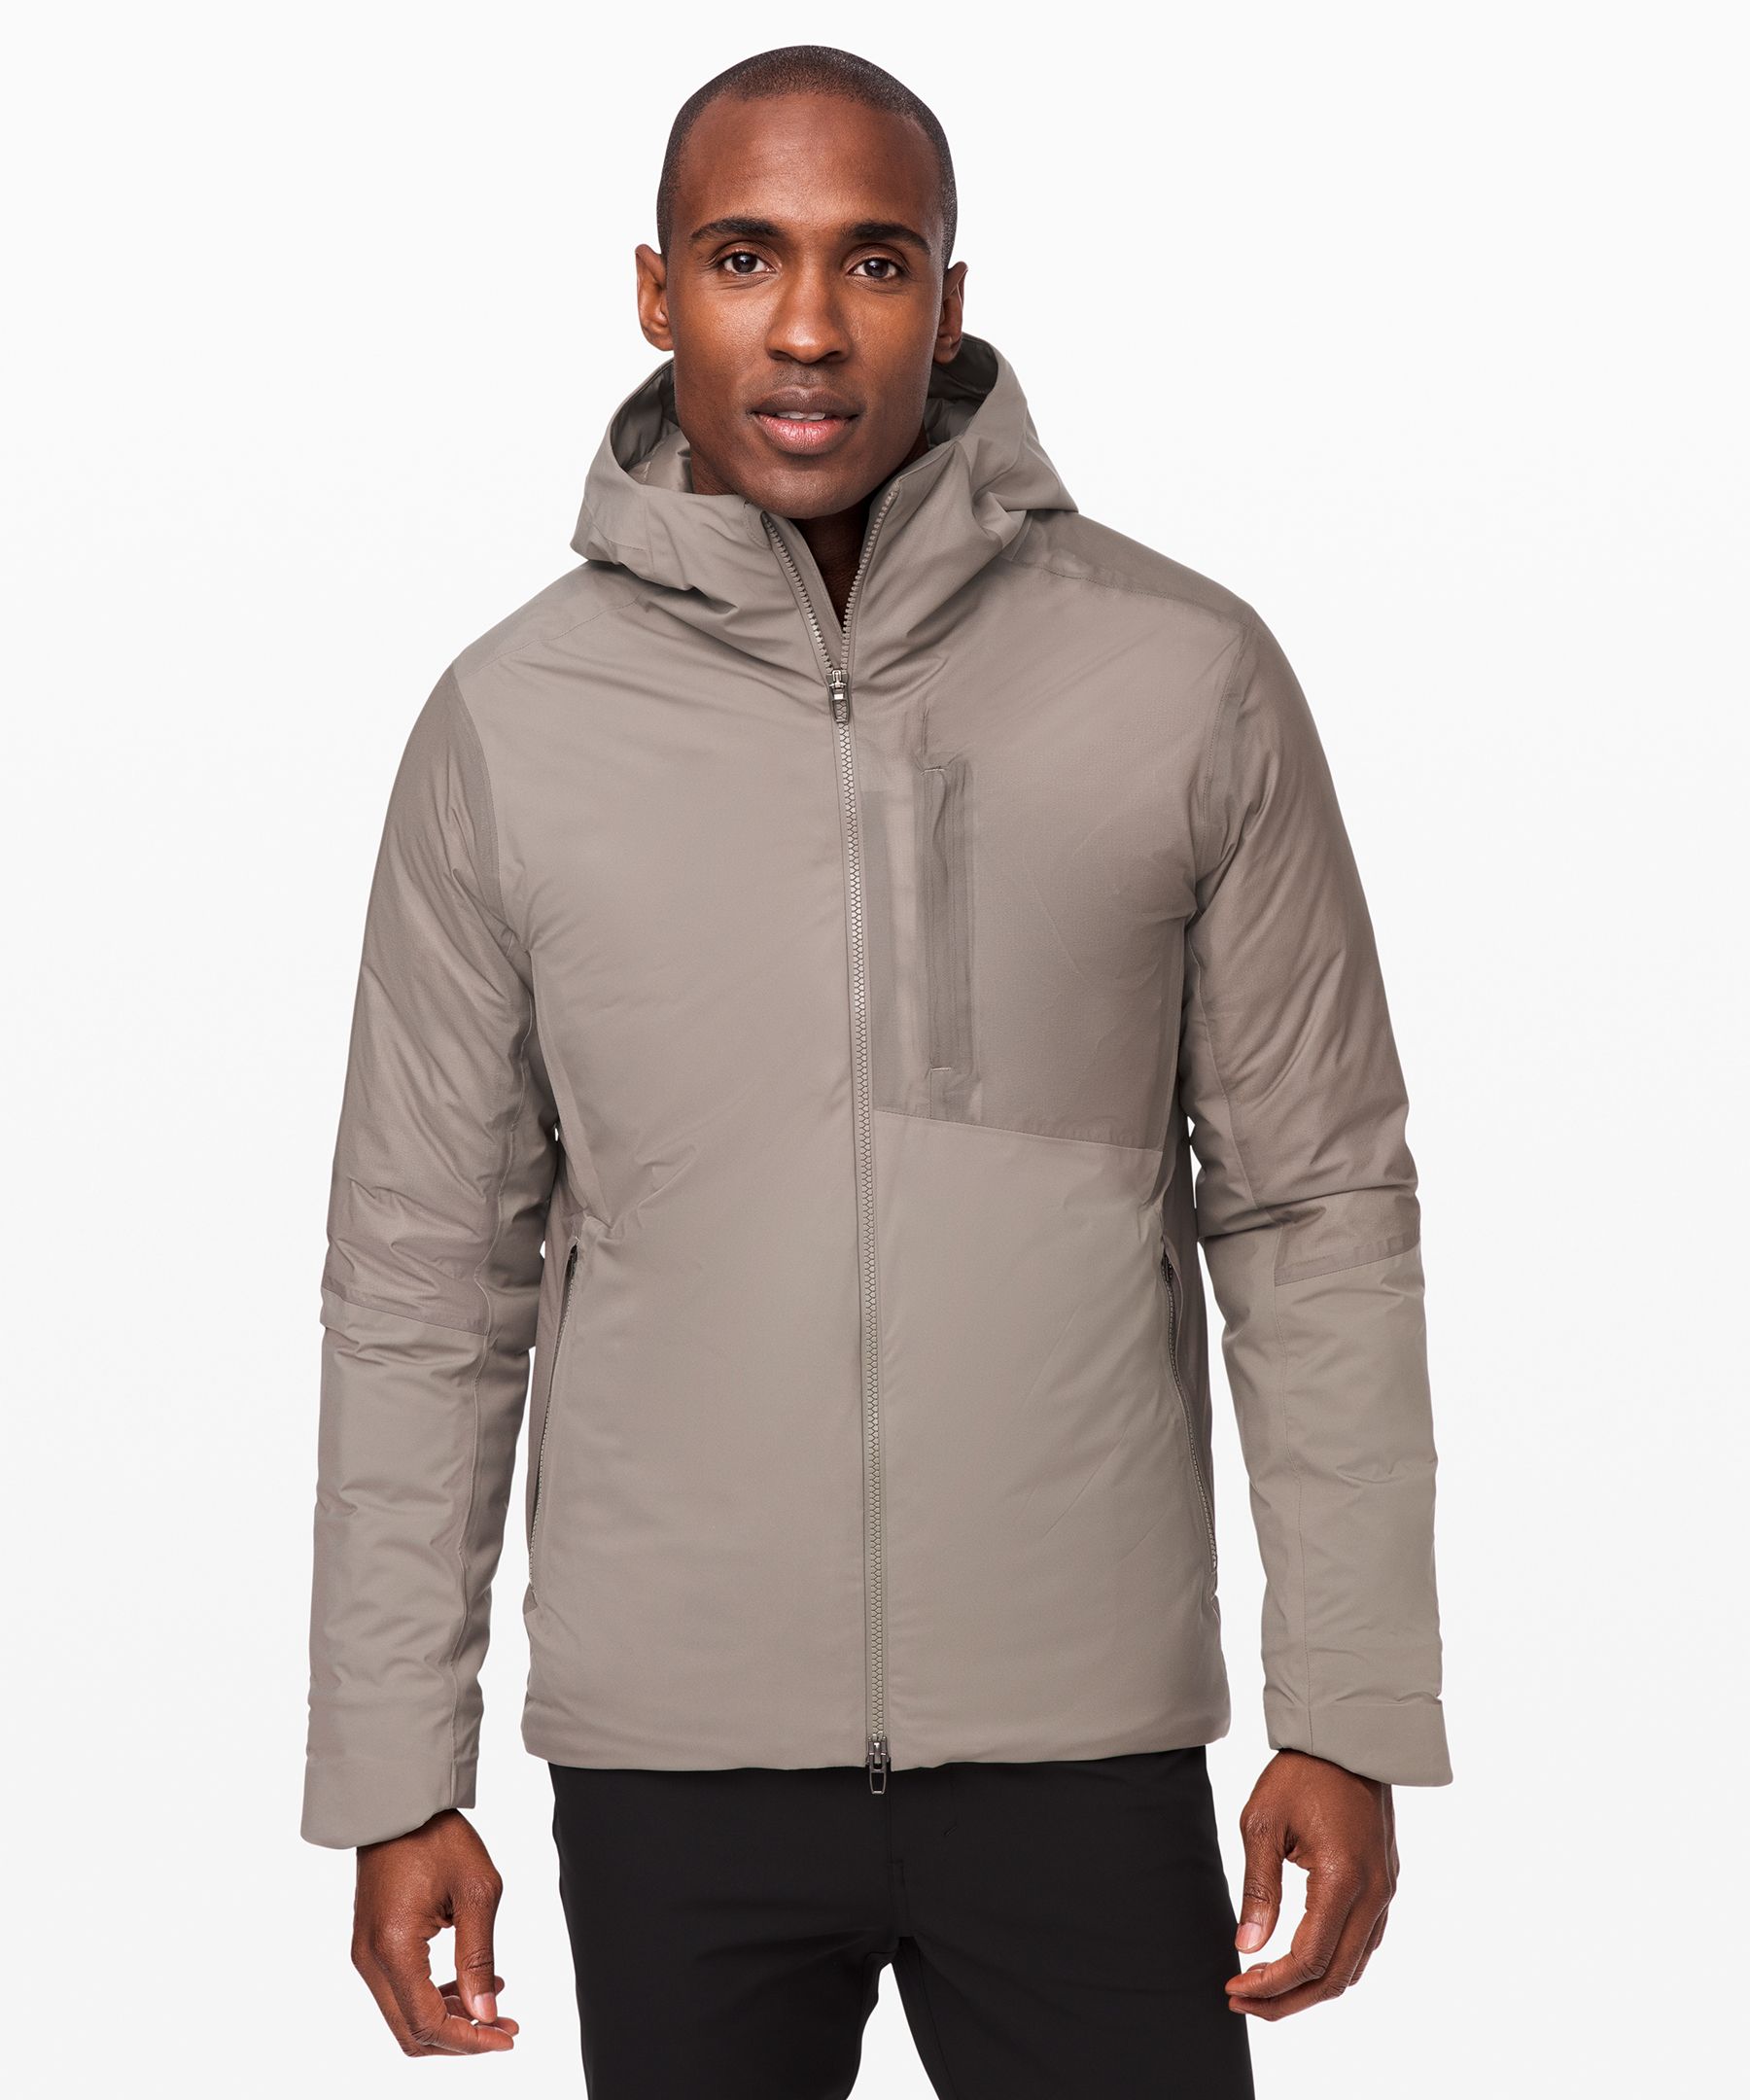 lululemon pinnacle warmth jacket review